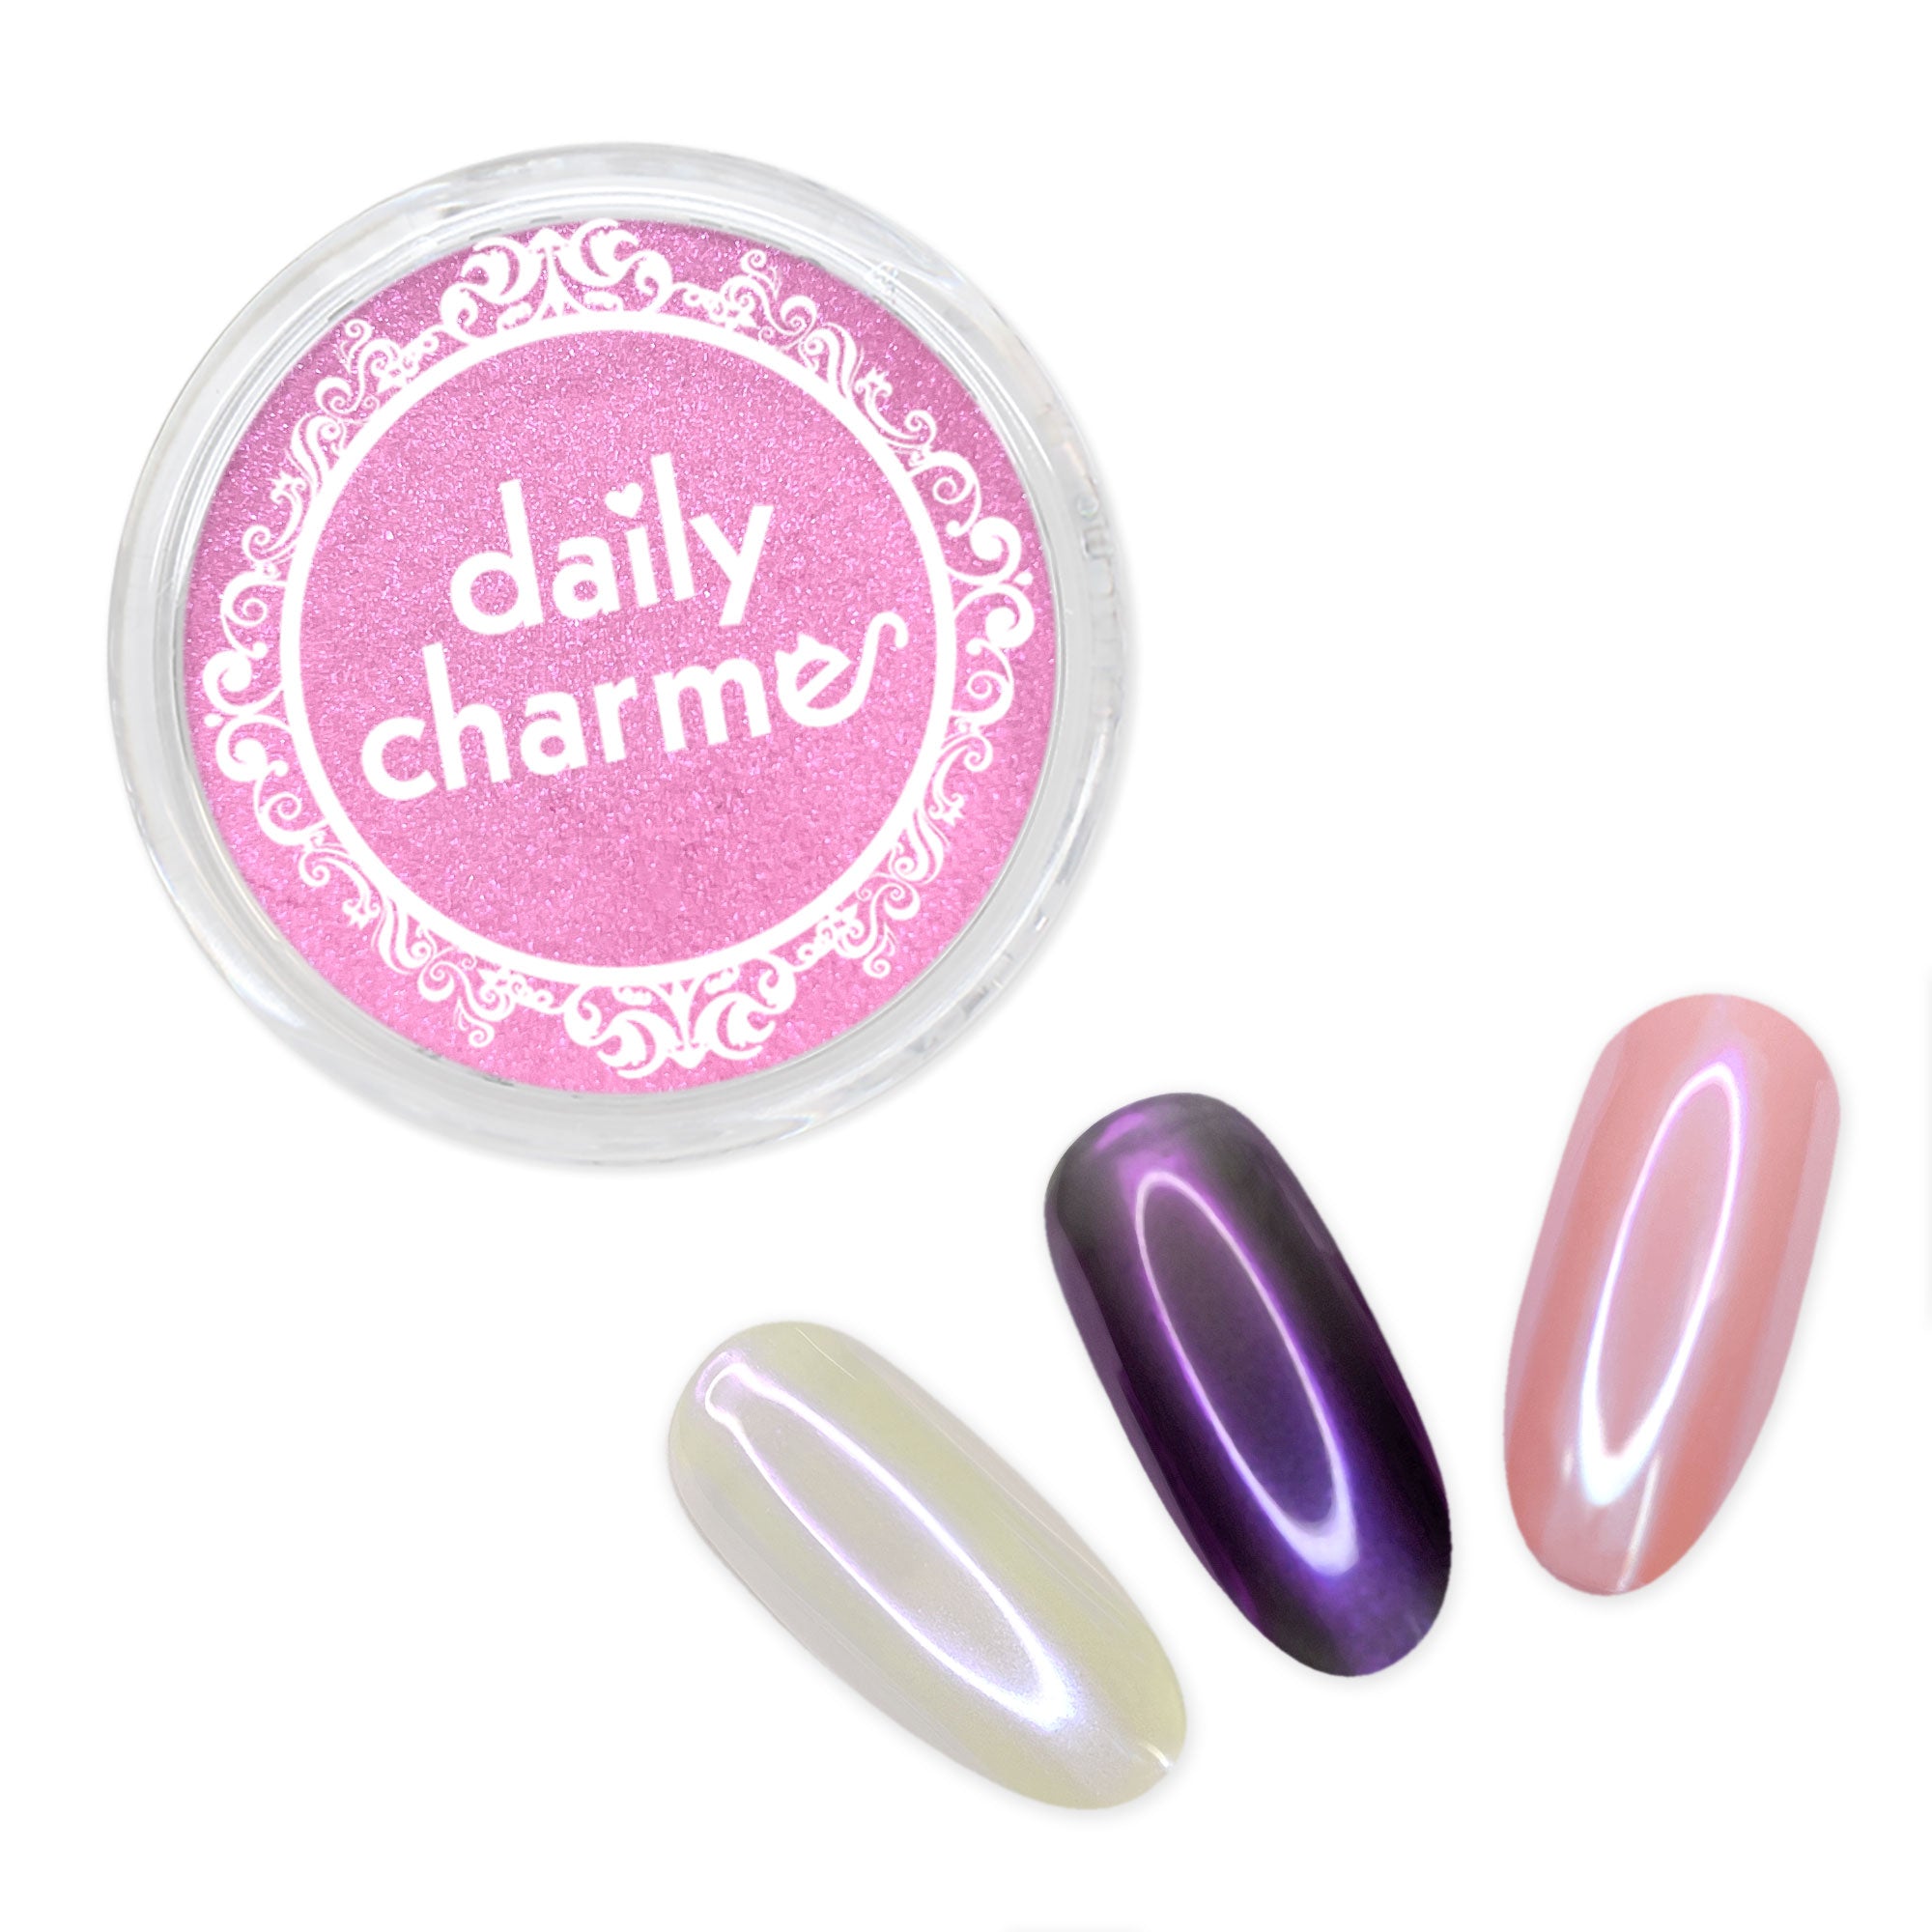 Daily Charme Stardust Chrome Powder / Amethyst Purple Pink Iridescent 